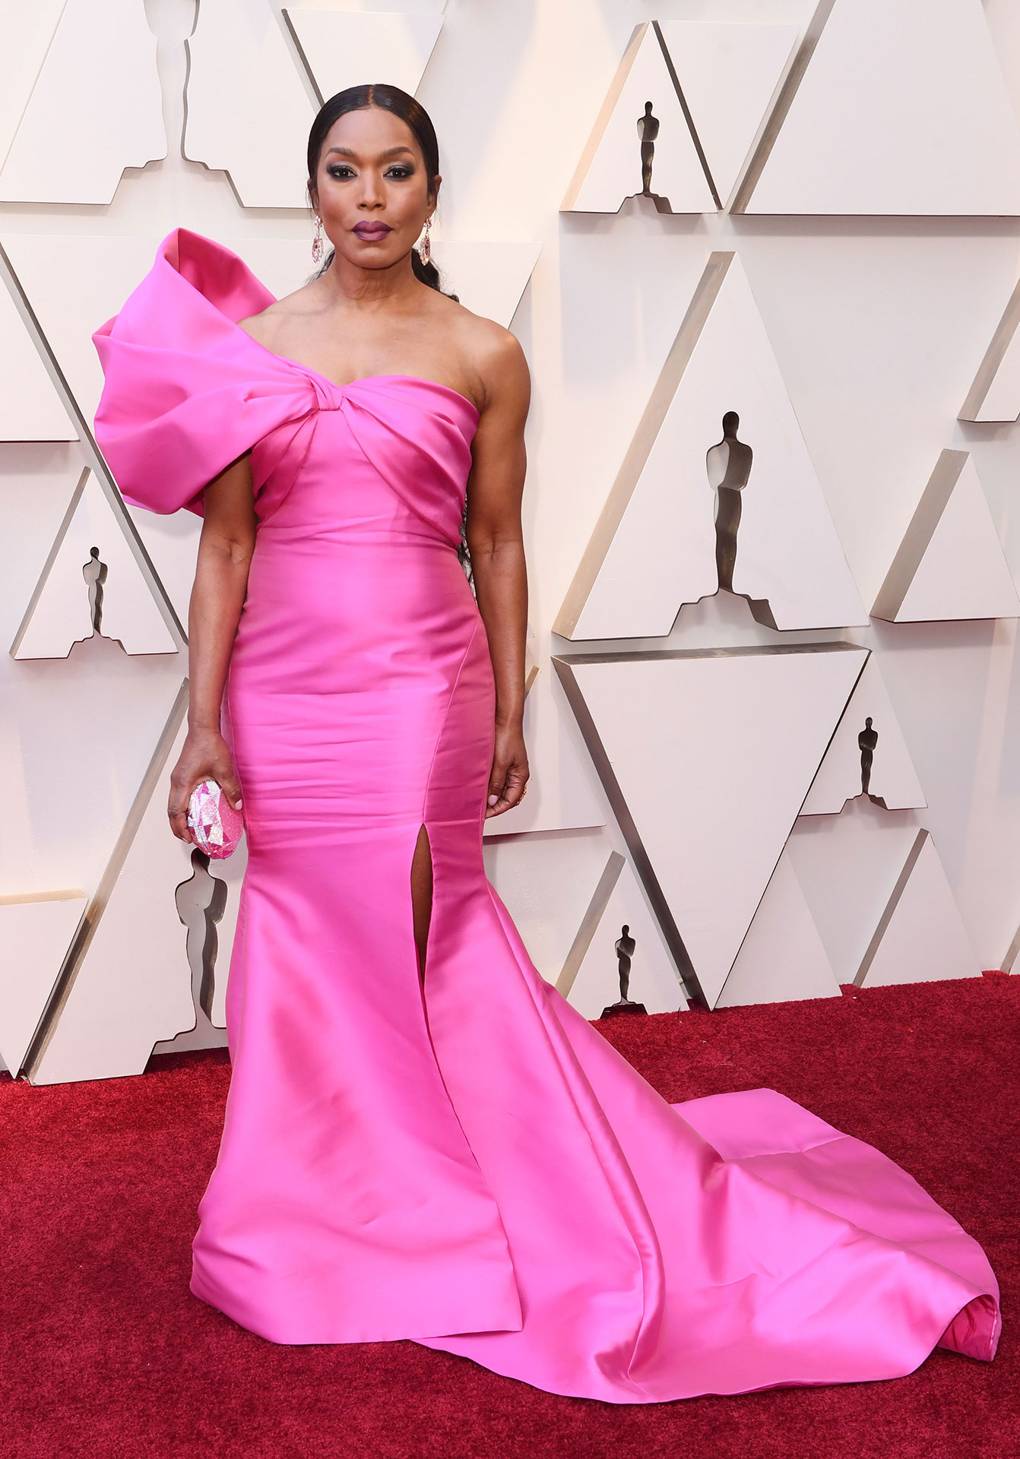 Oscars Best Dressed 2019 - Angela Basset in Reem Acra